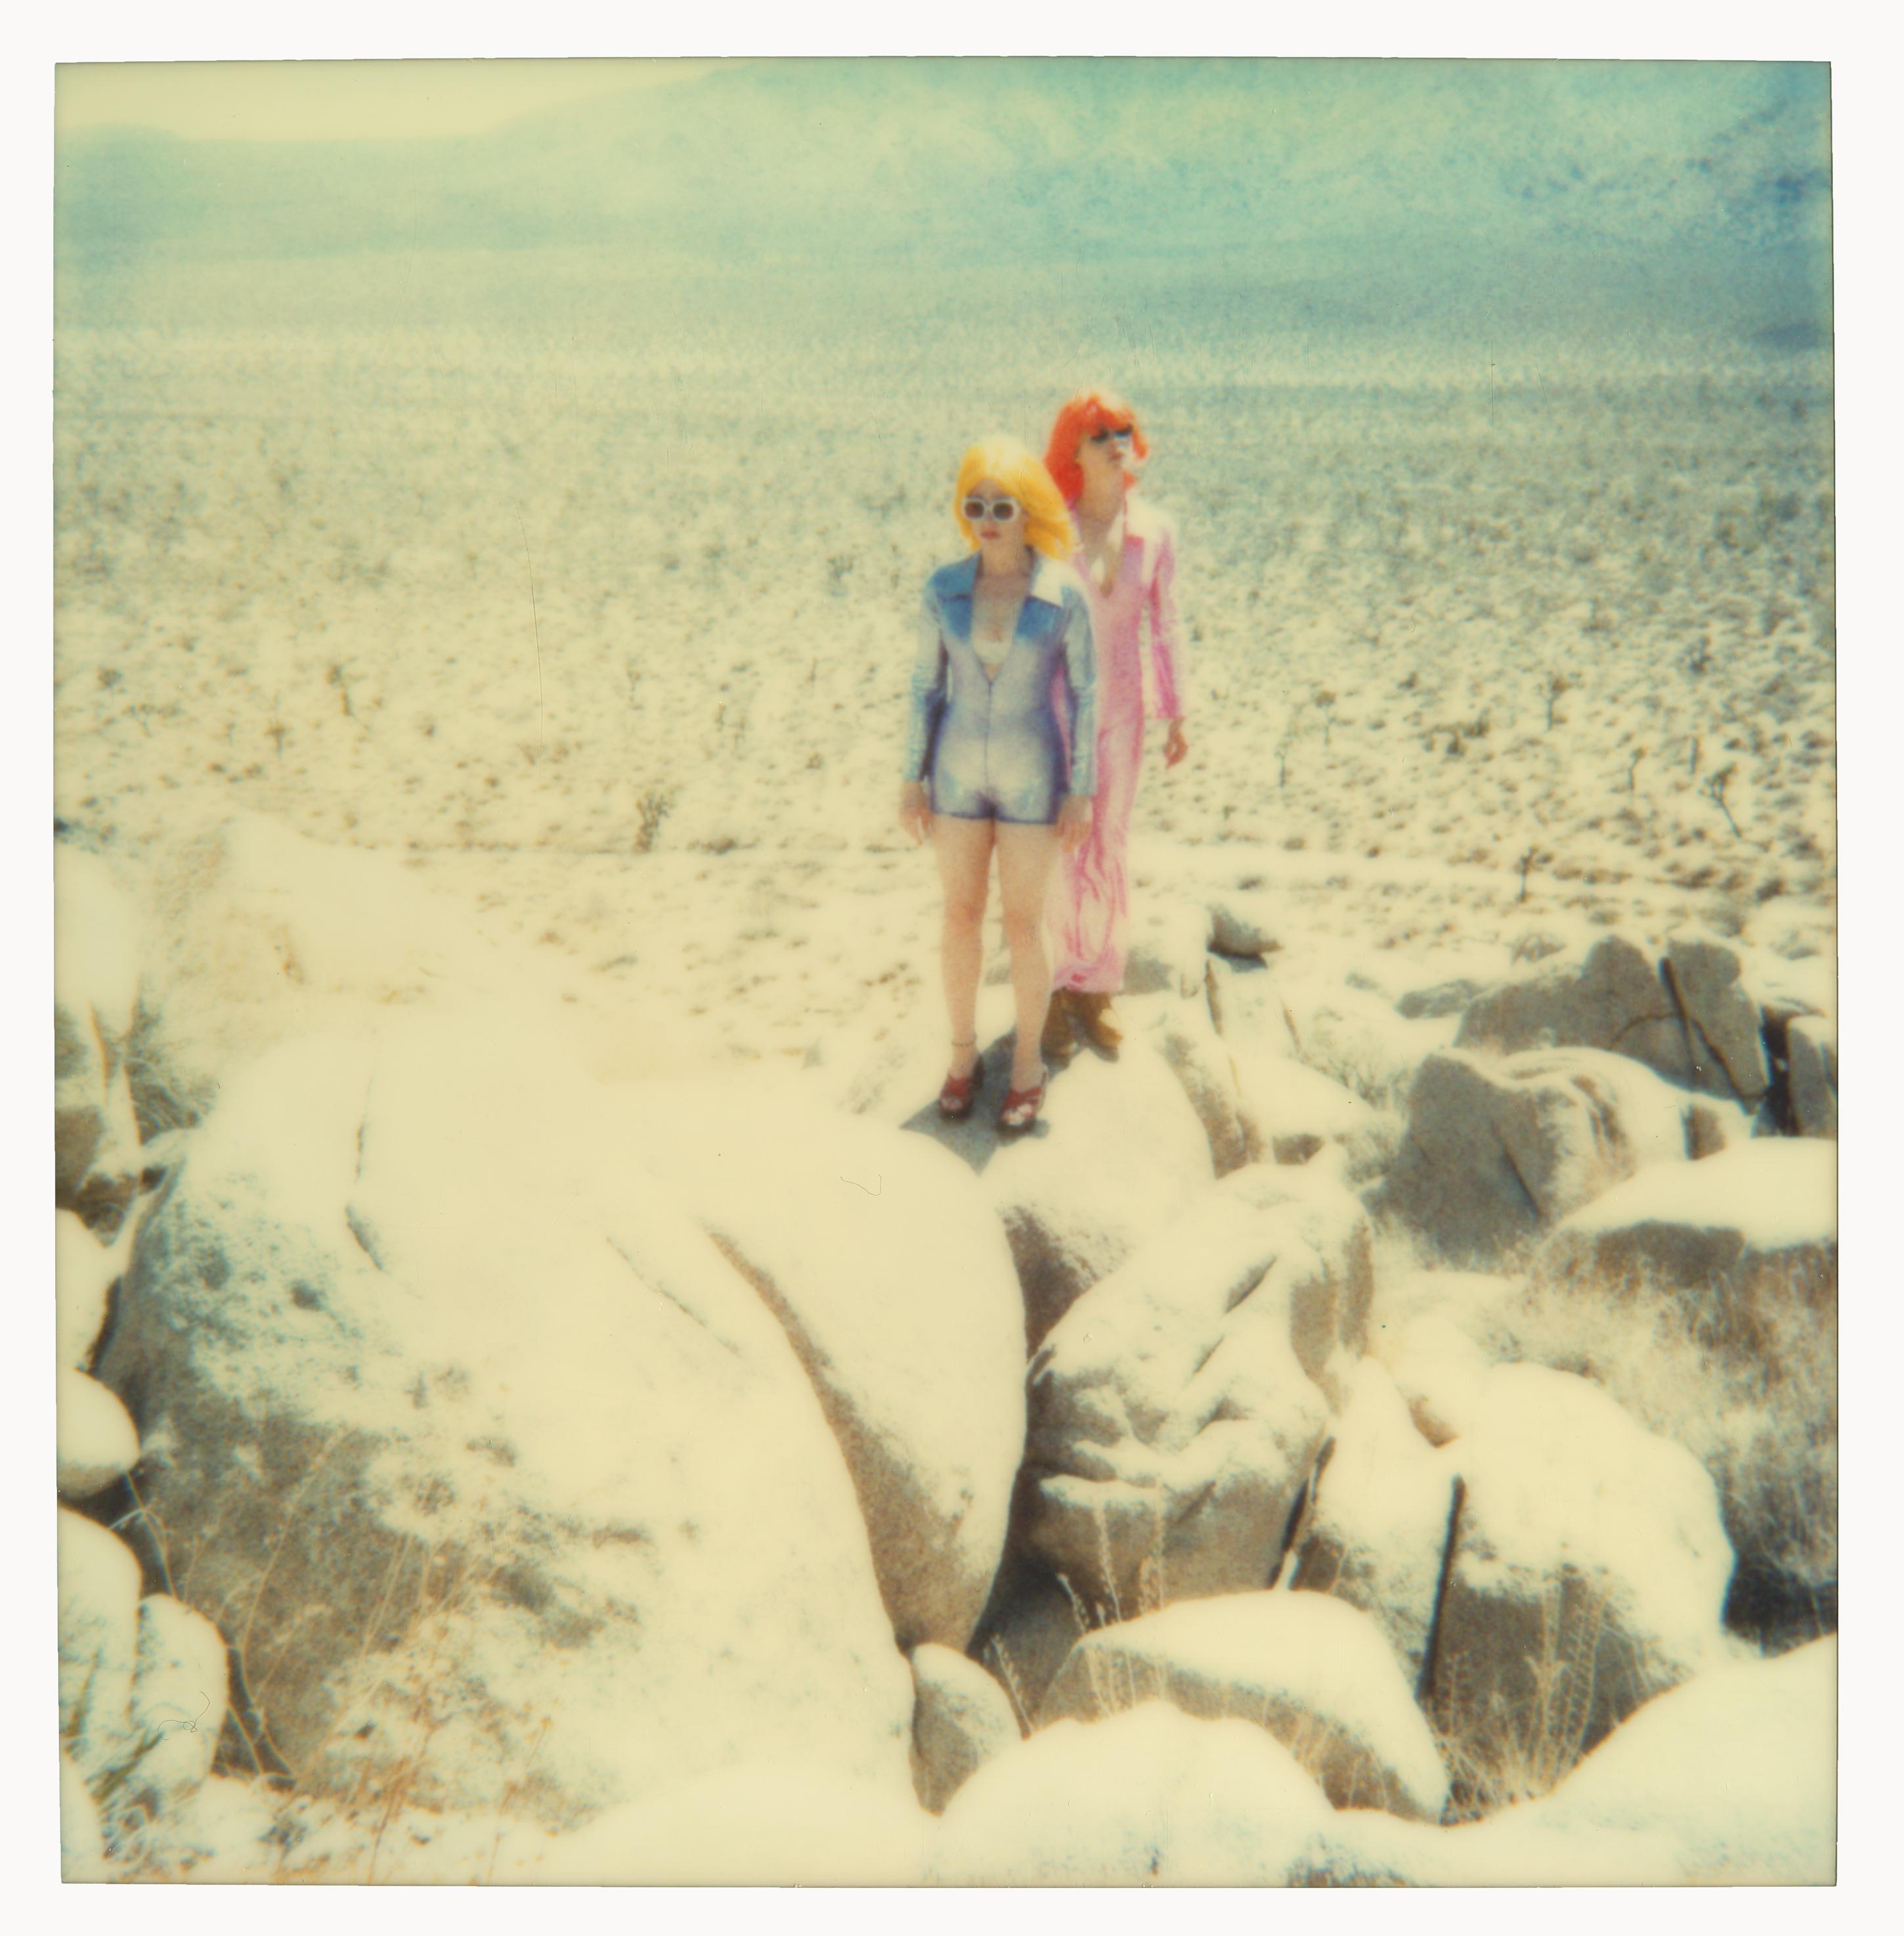 Stefanie Schneider Portrait Photograph - On the Rocks (Long Way Home) - analog, 58x57cm